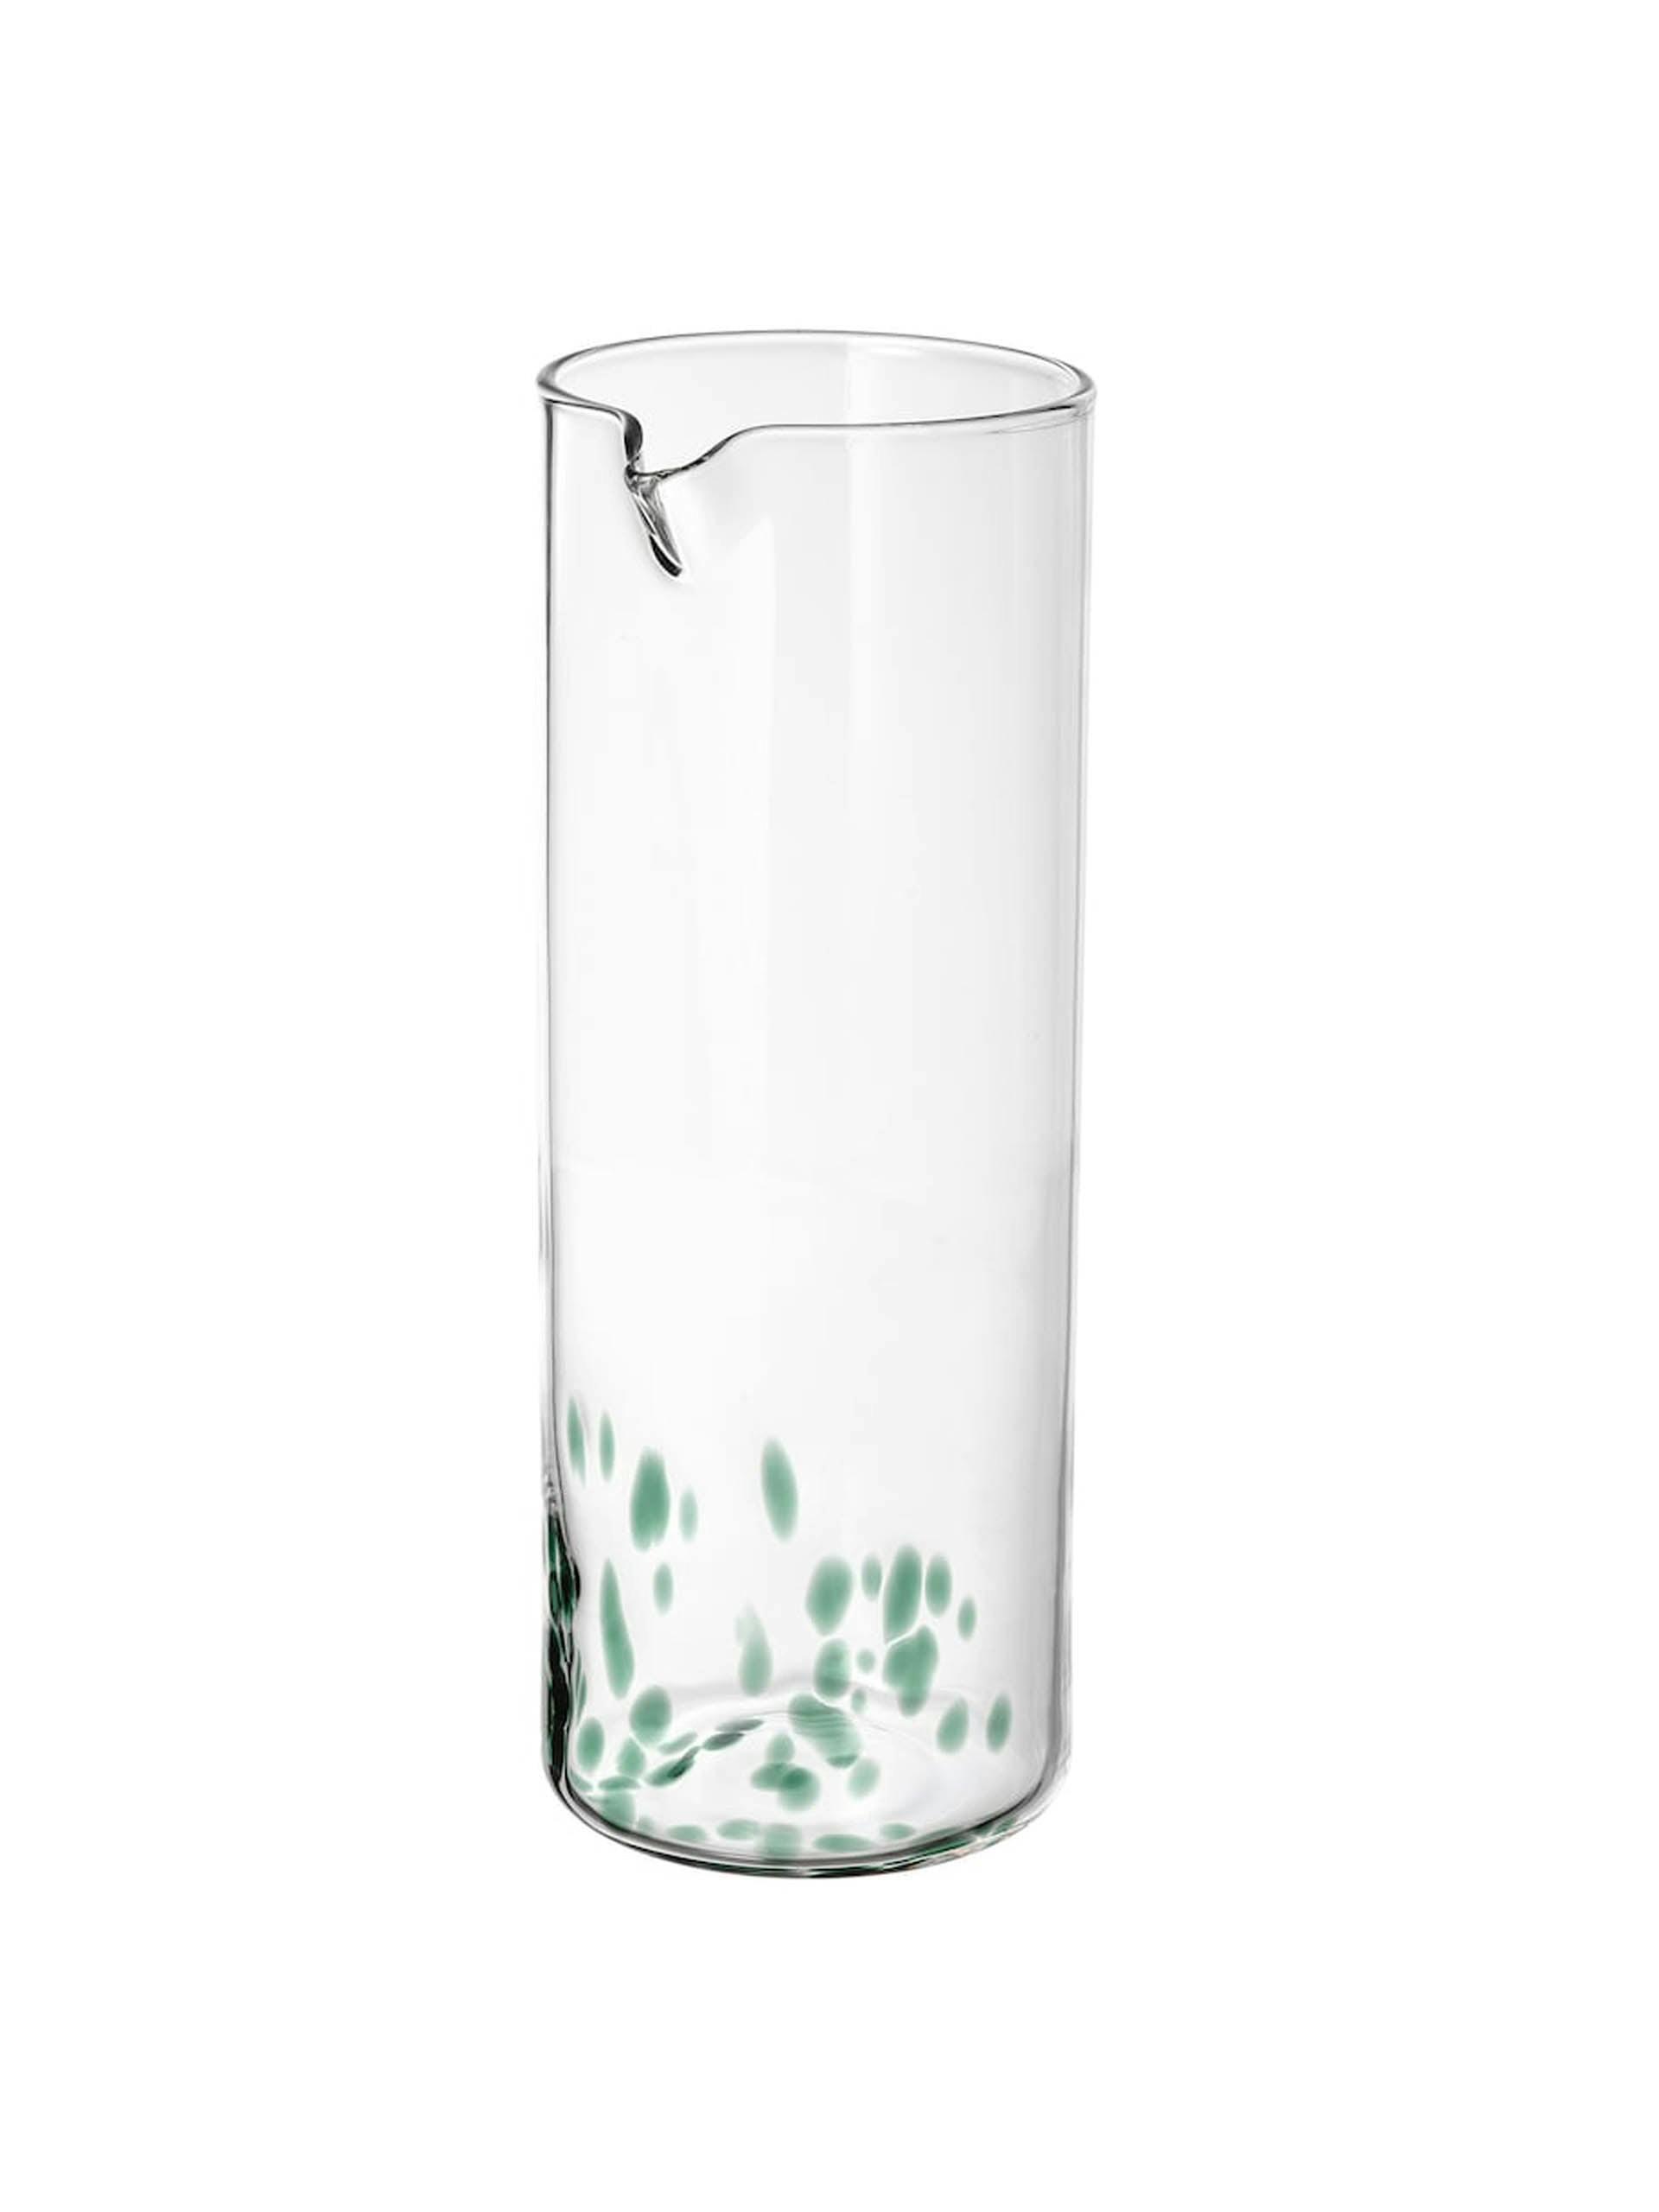 Clear green glass carafe